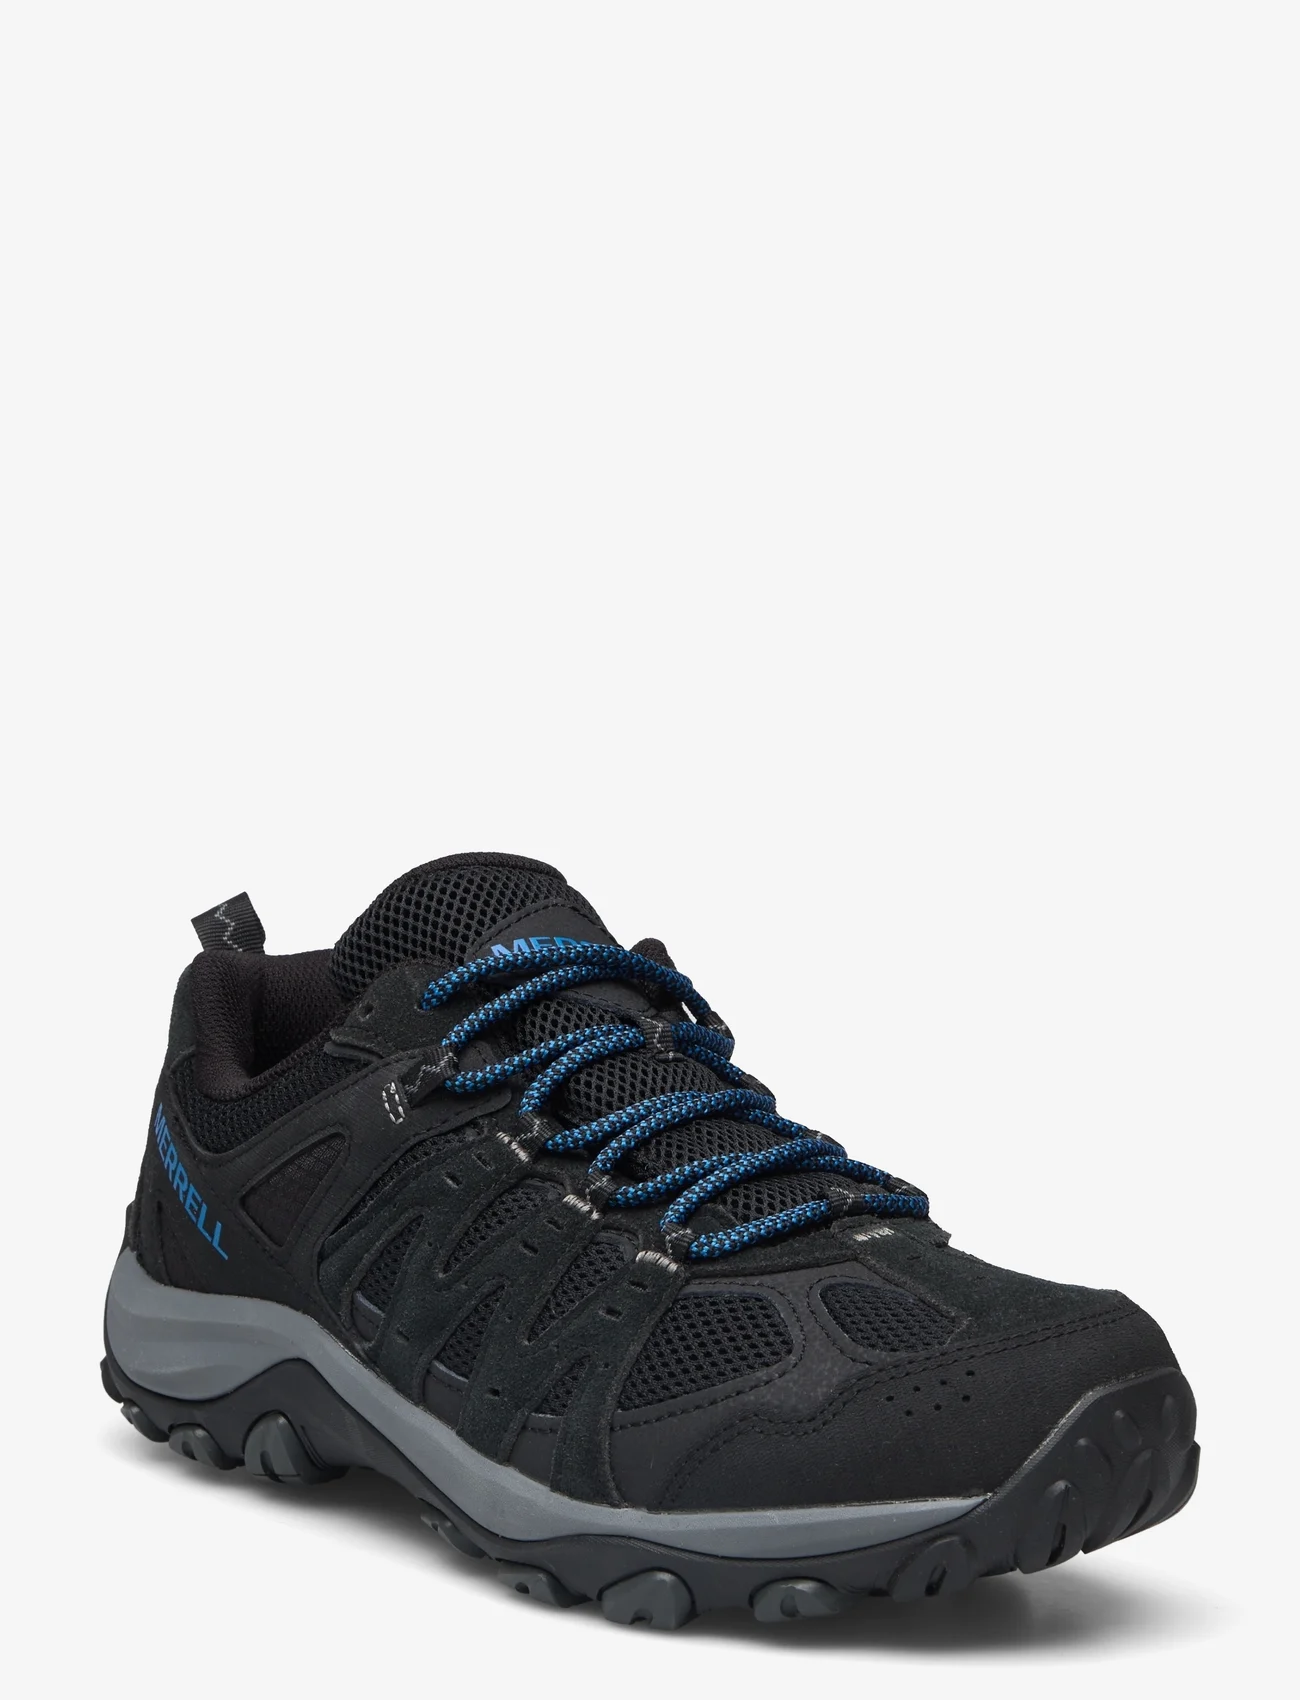 Merrell - Men's Accentor 3 - Black - hiking shoes - black - 0